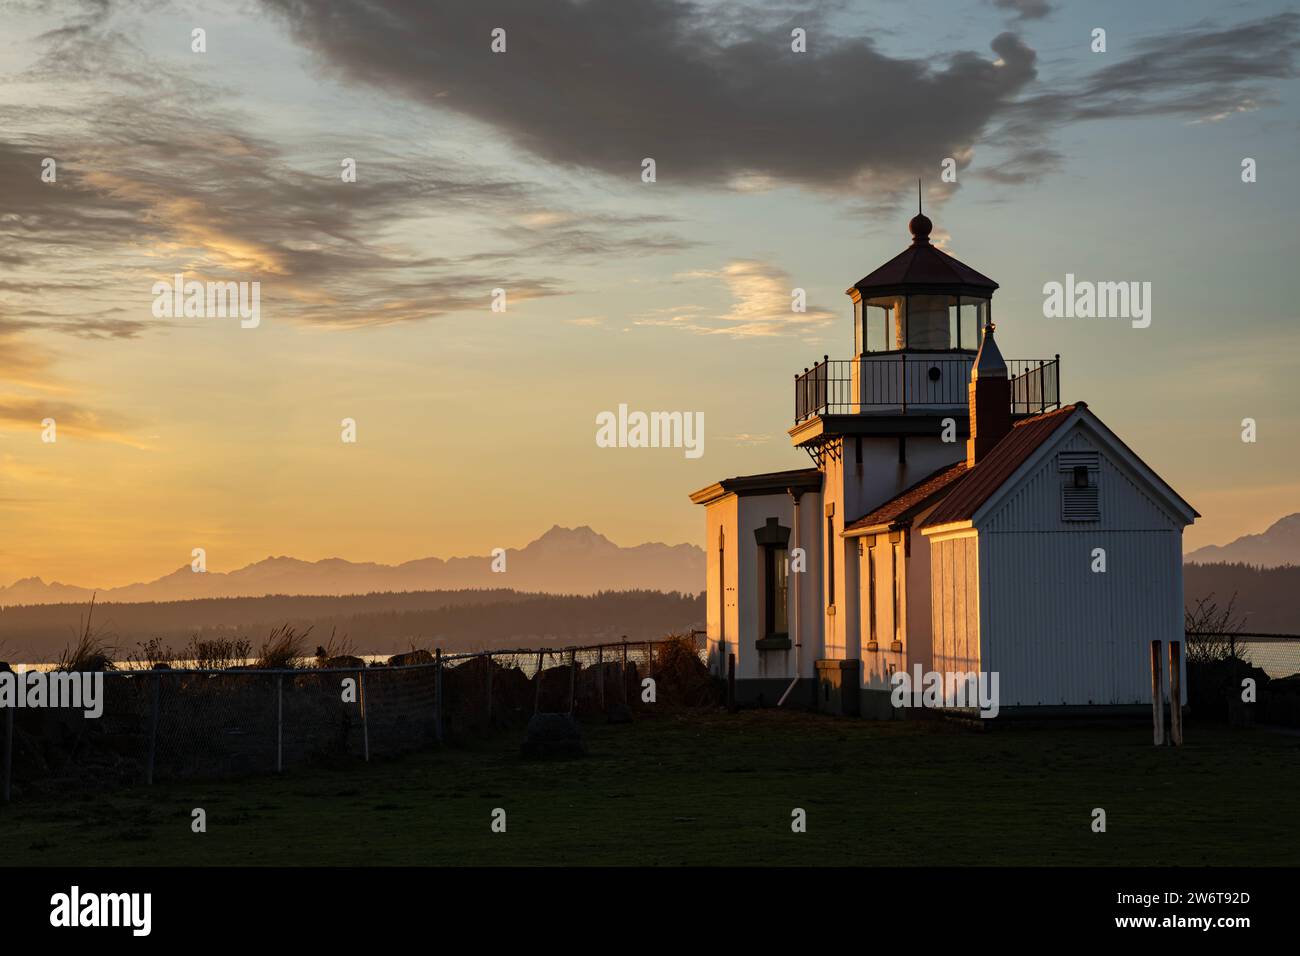 WA23886-00...WASHINGTON - Sonnenuntergang am West Point Lighthouse im Discovery Park von Seattle. Stockfoto